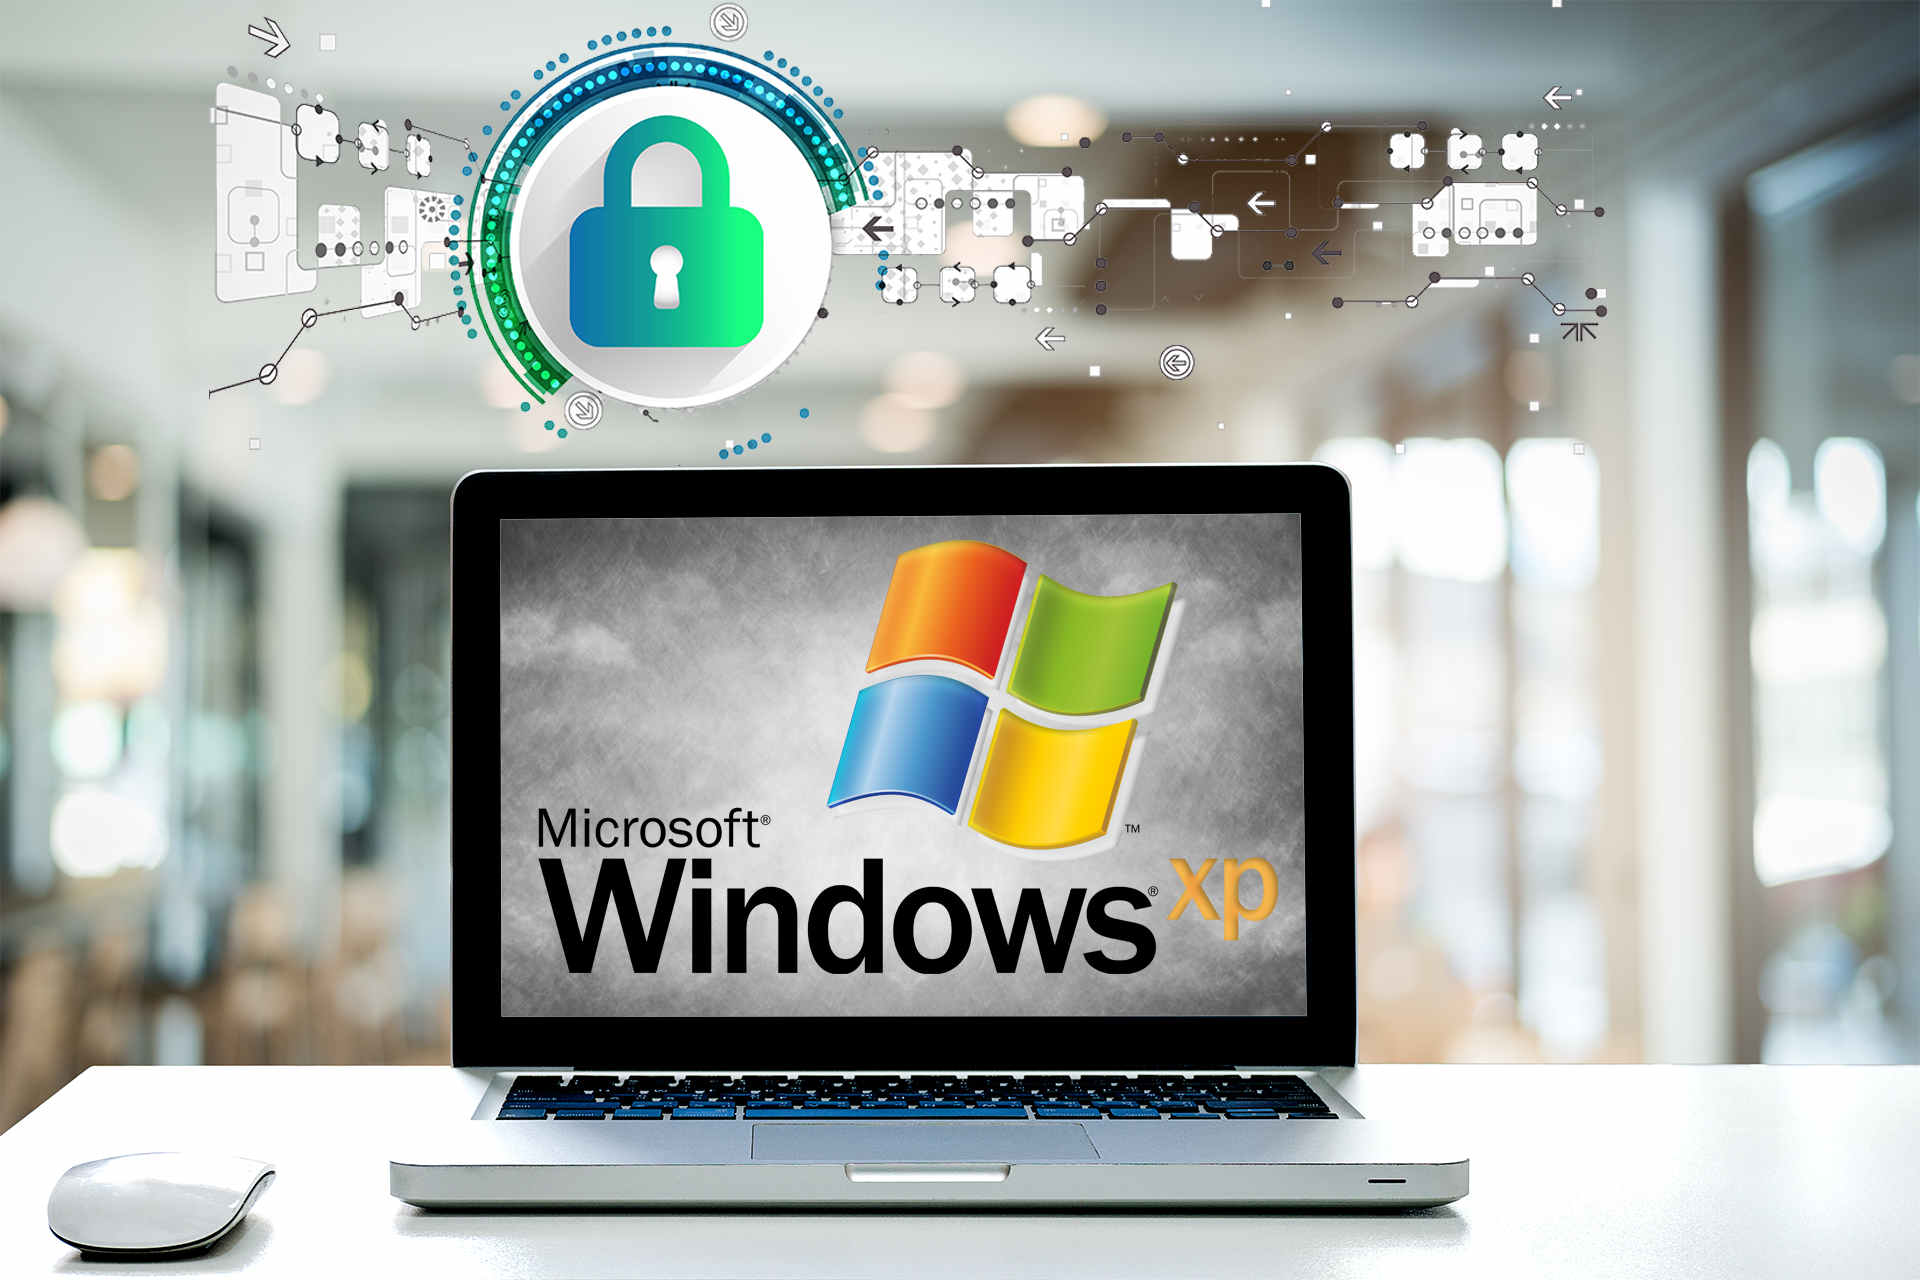 antivirus software free download for windows xp 32 bit